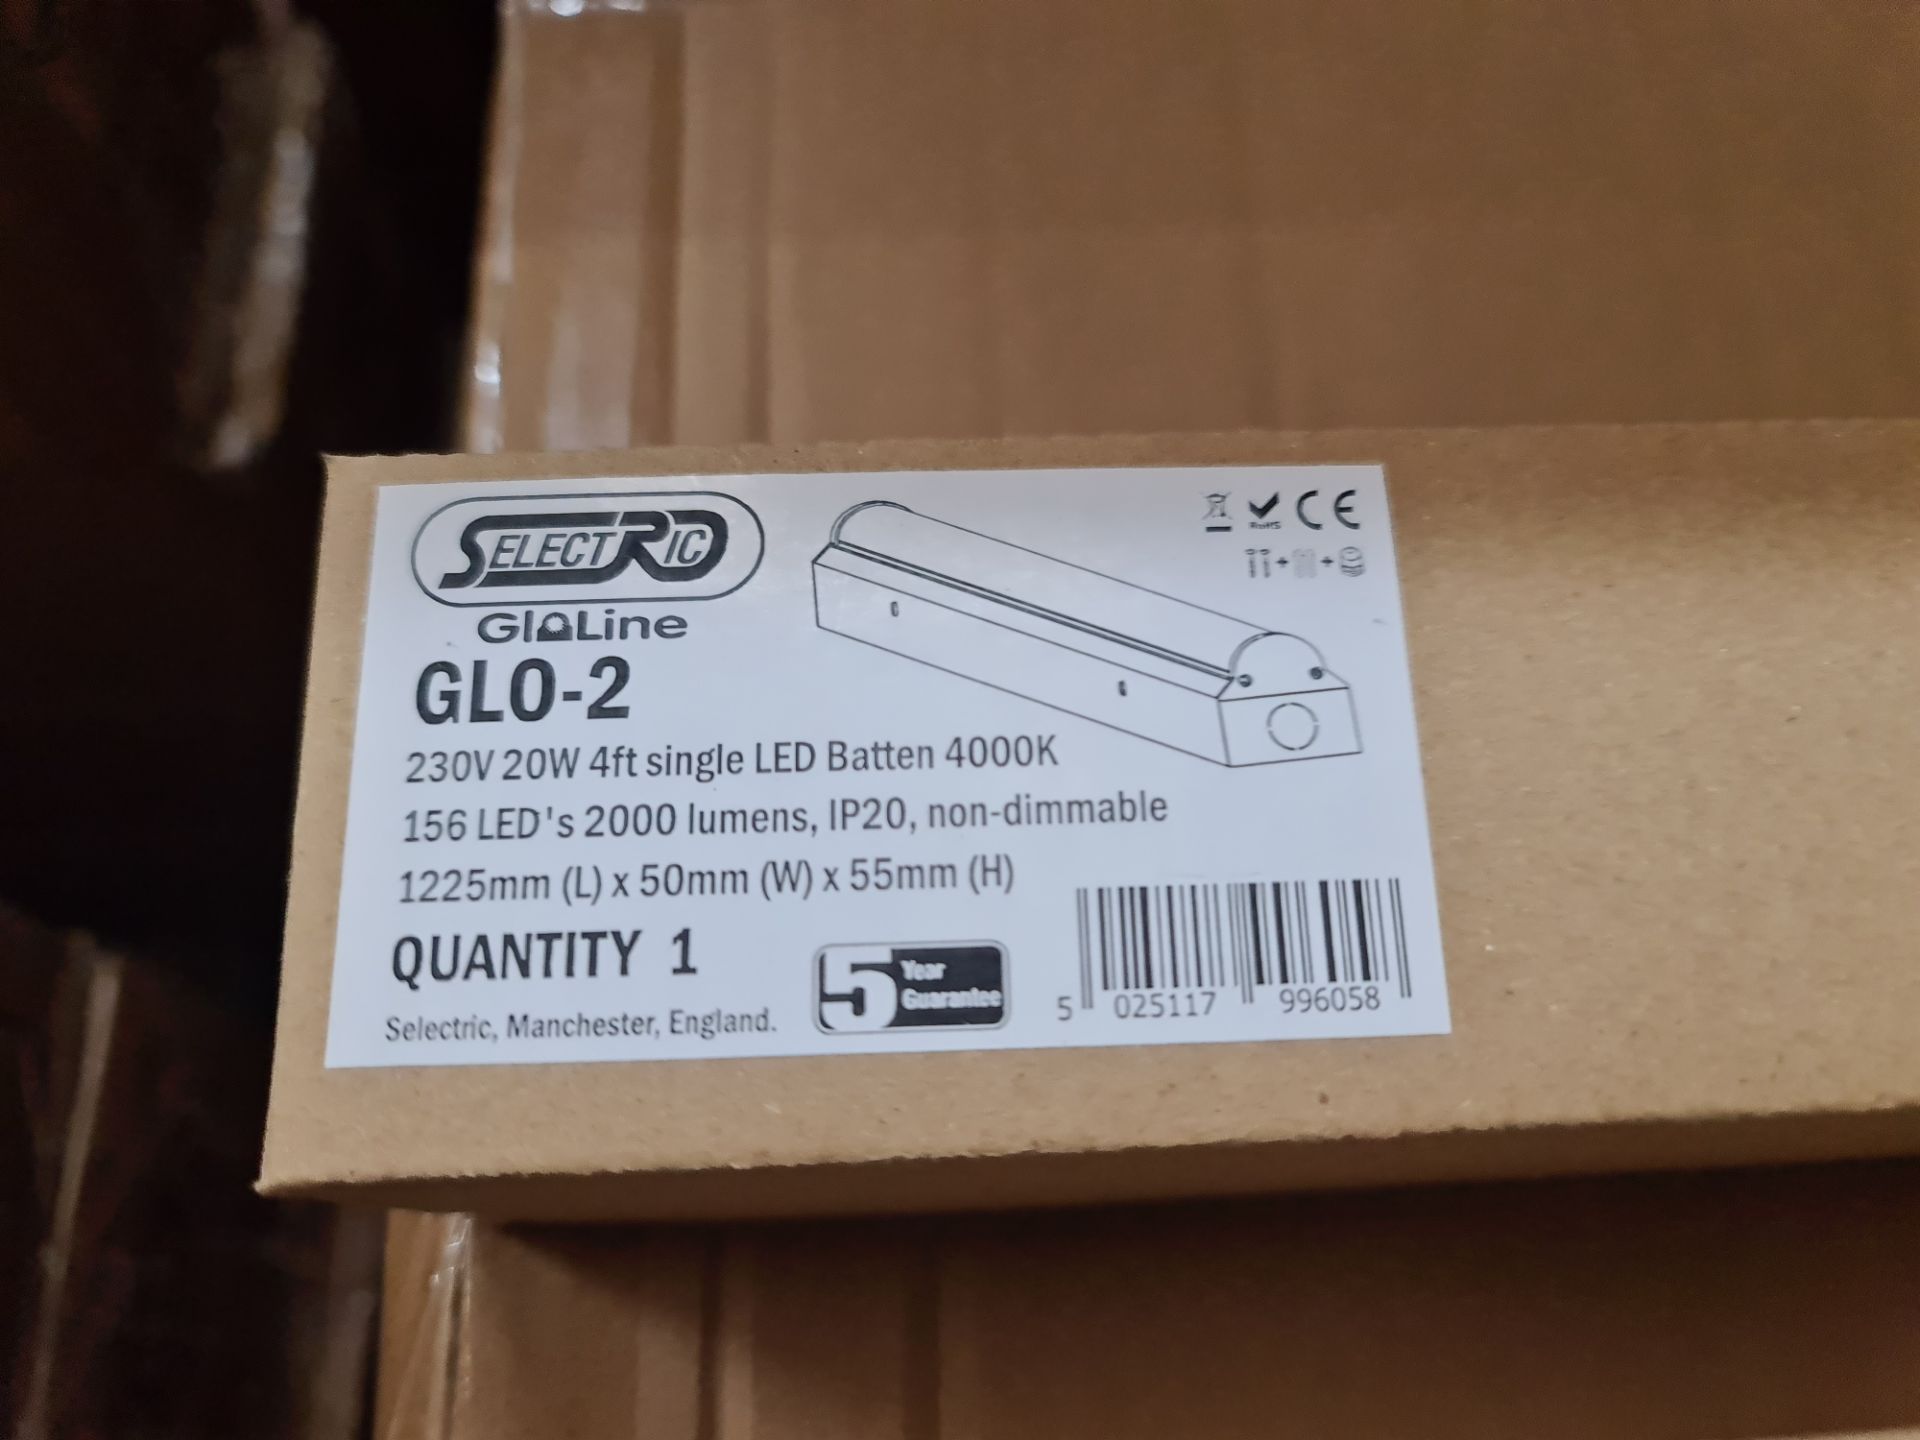 32 off Selectric Gloline GLO-2 230V 20w 4ft single LED batten 4000k lights. 156 LEDs, 2000 lumens,